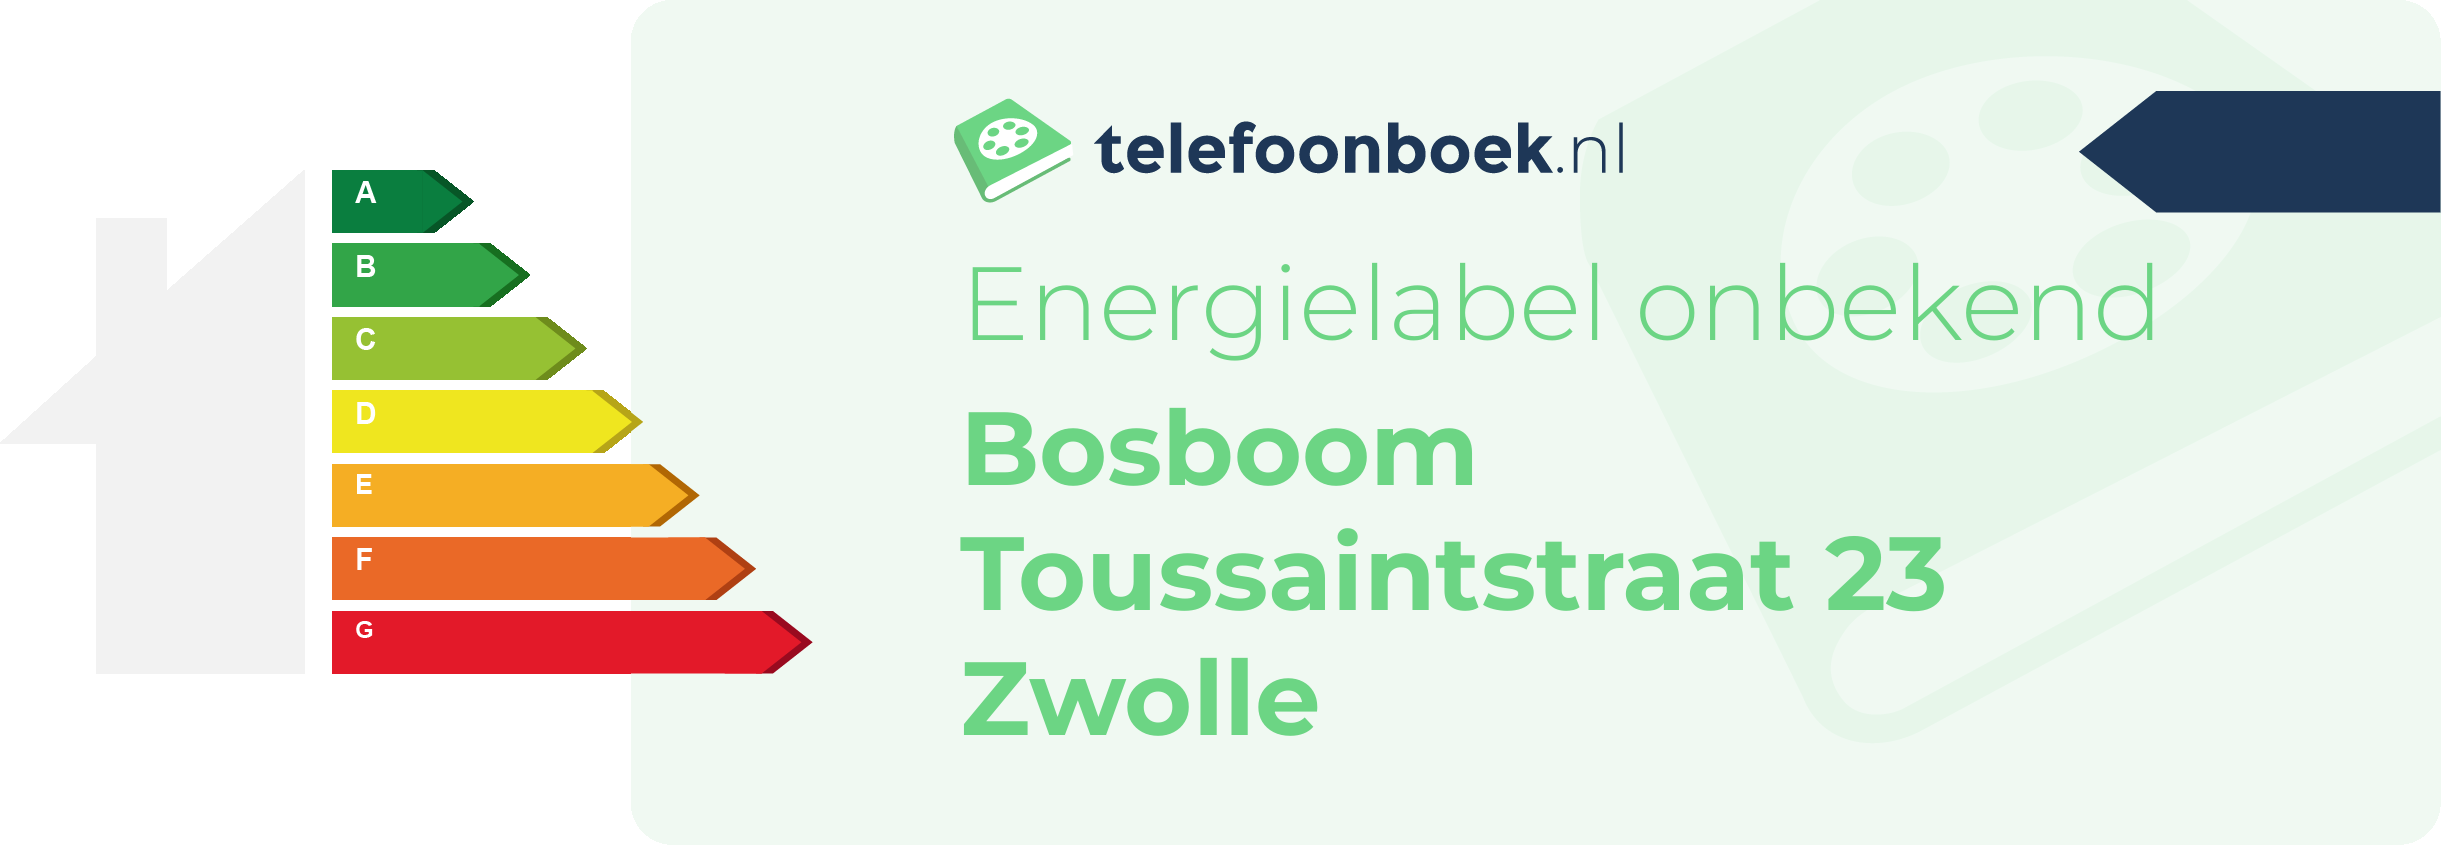 Energielabel Bosboom Toussaintstraat 23 Zwolle